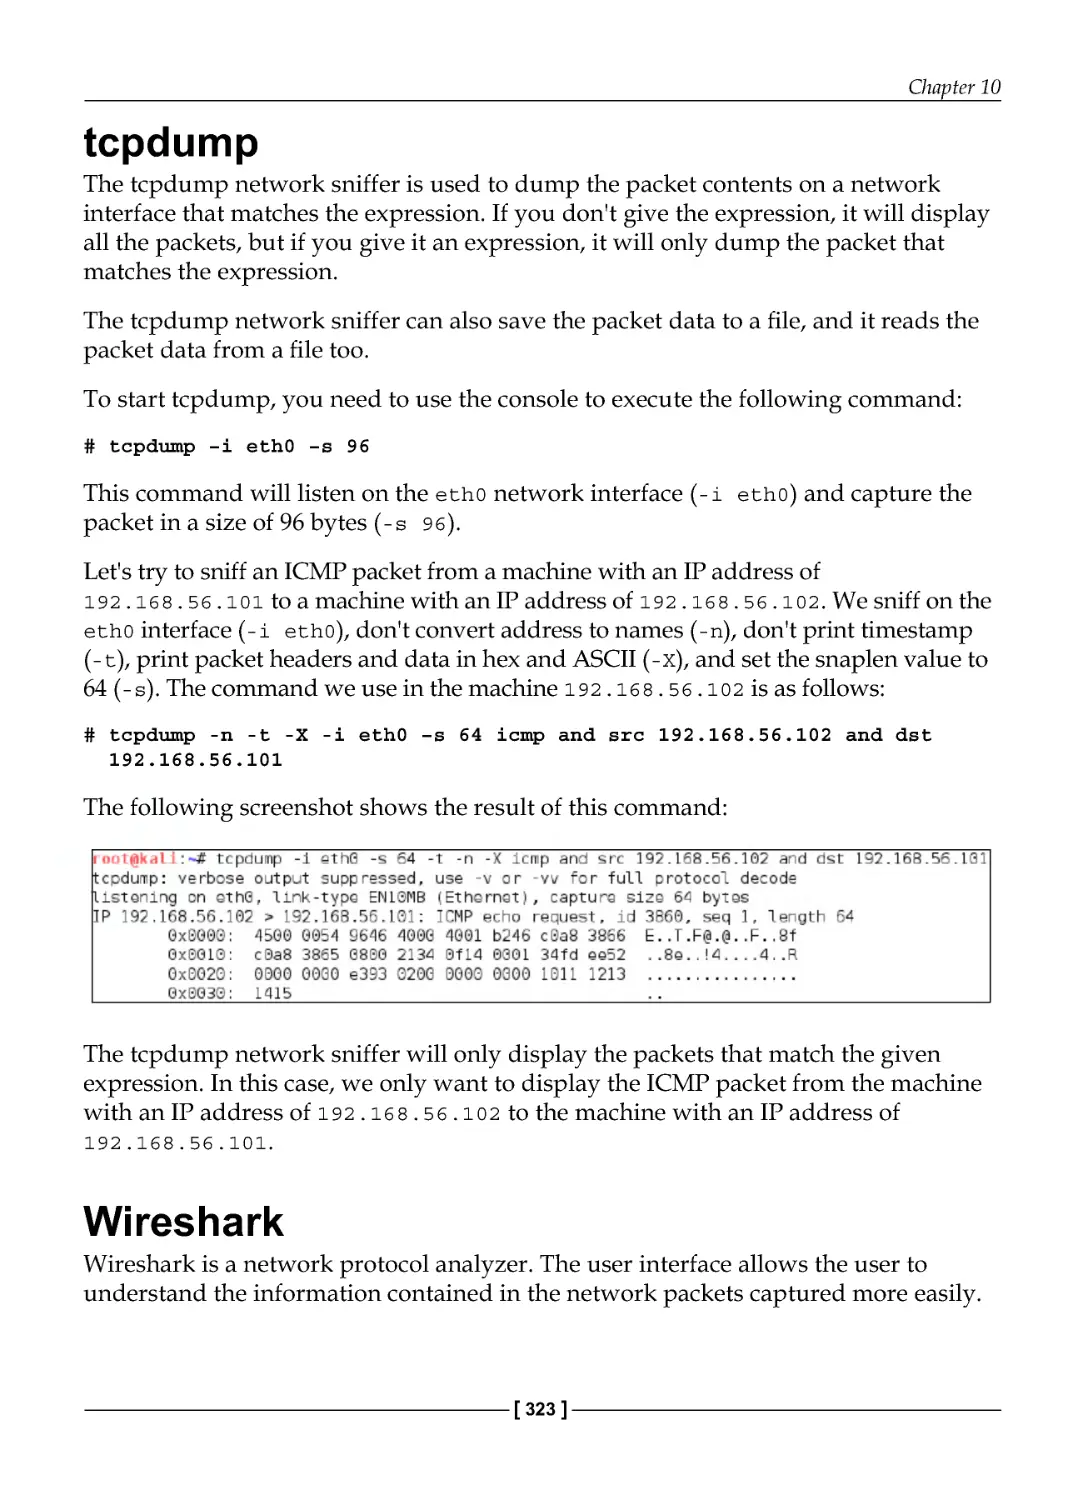 tcpdump
Wireshark